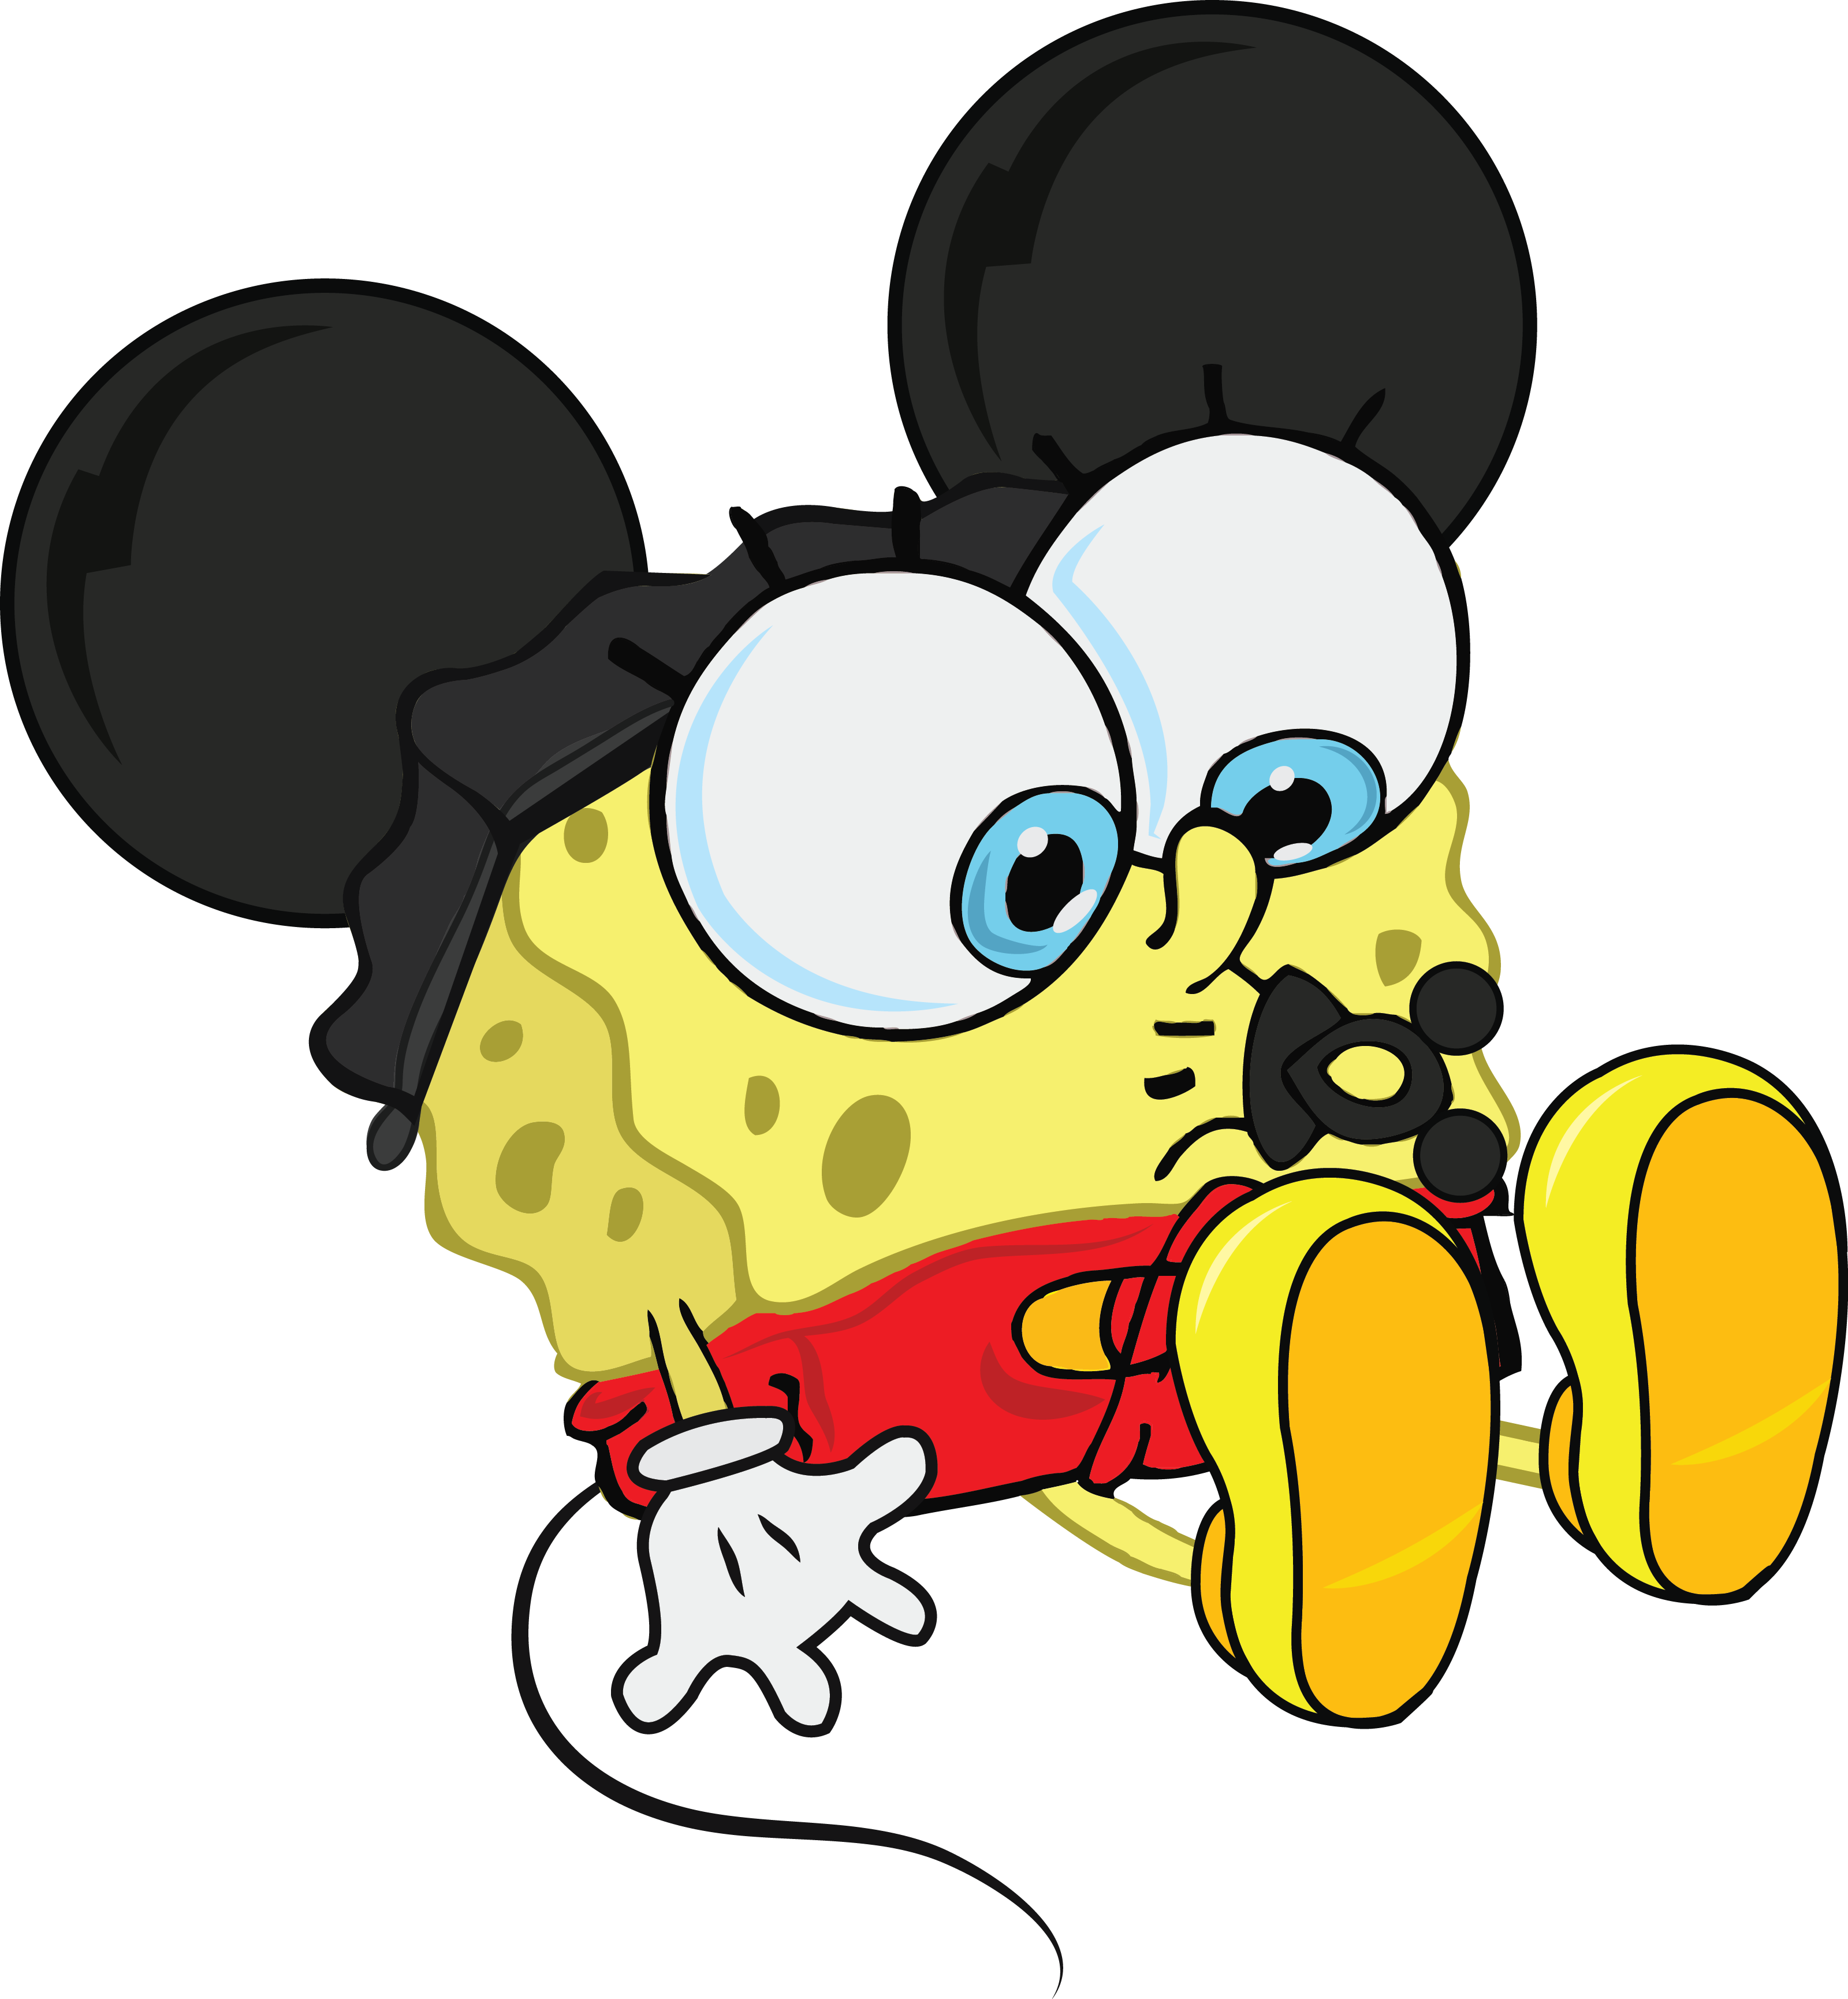 Baby Spongebob Mickey Mouse Collab!. Cute Cartoon Wallpaper, Spongebob Drawings, Cartoon Wallpaper Iphone